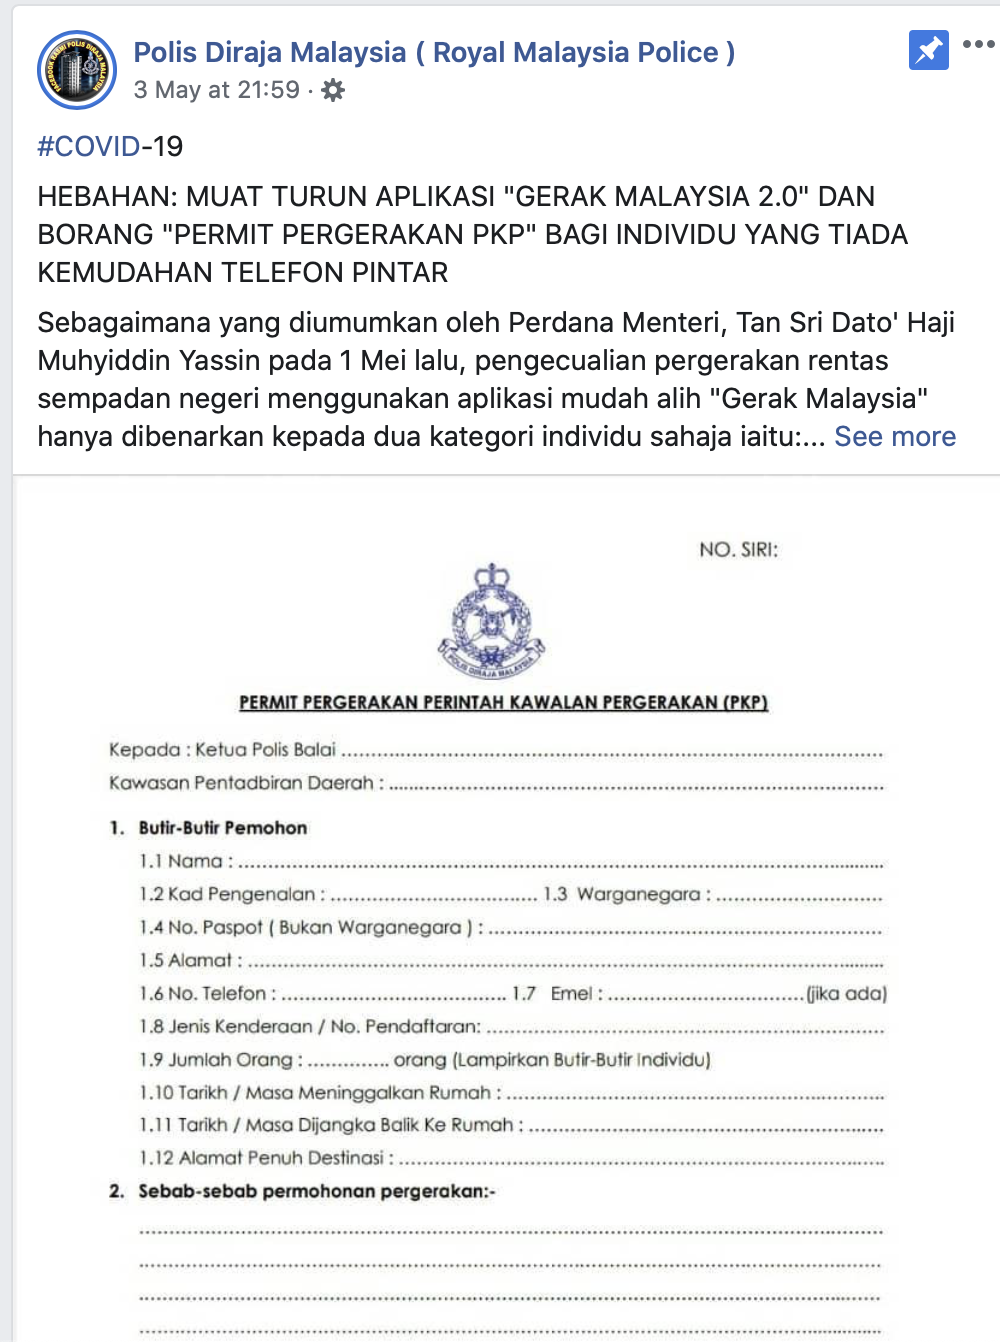 Borang permit pergerakan pkp 2021